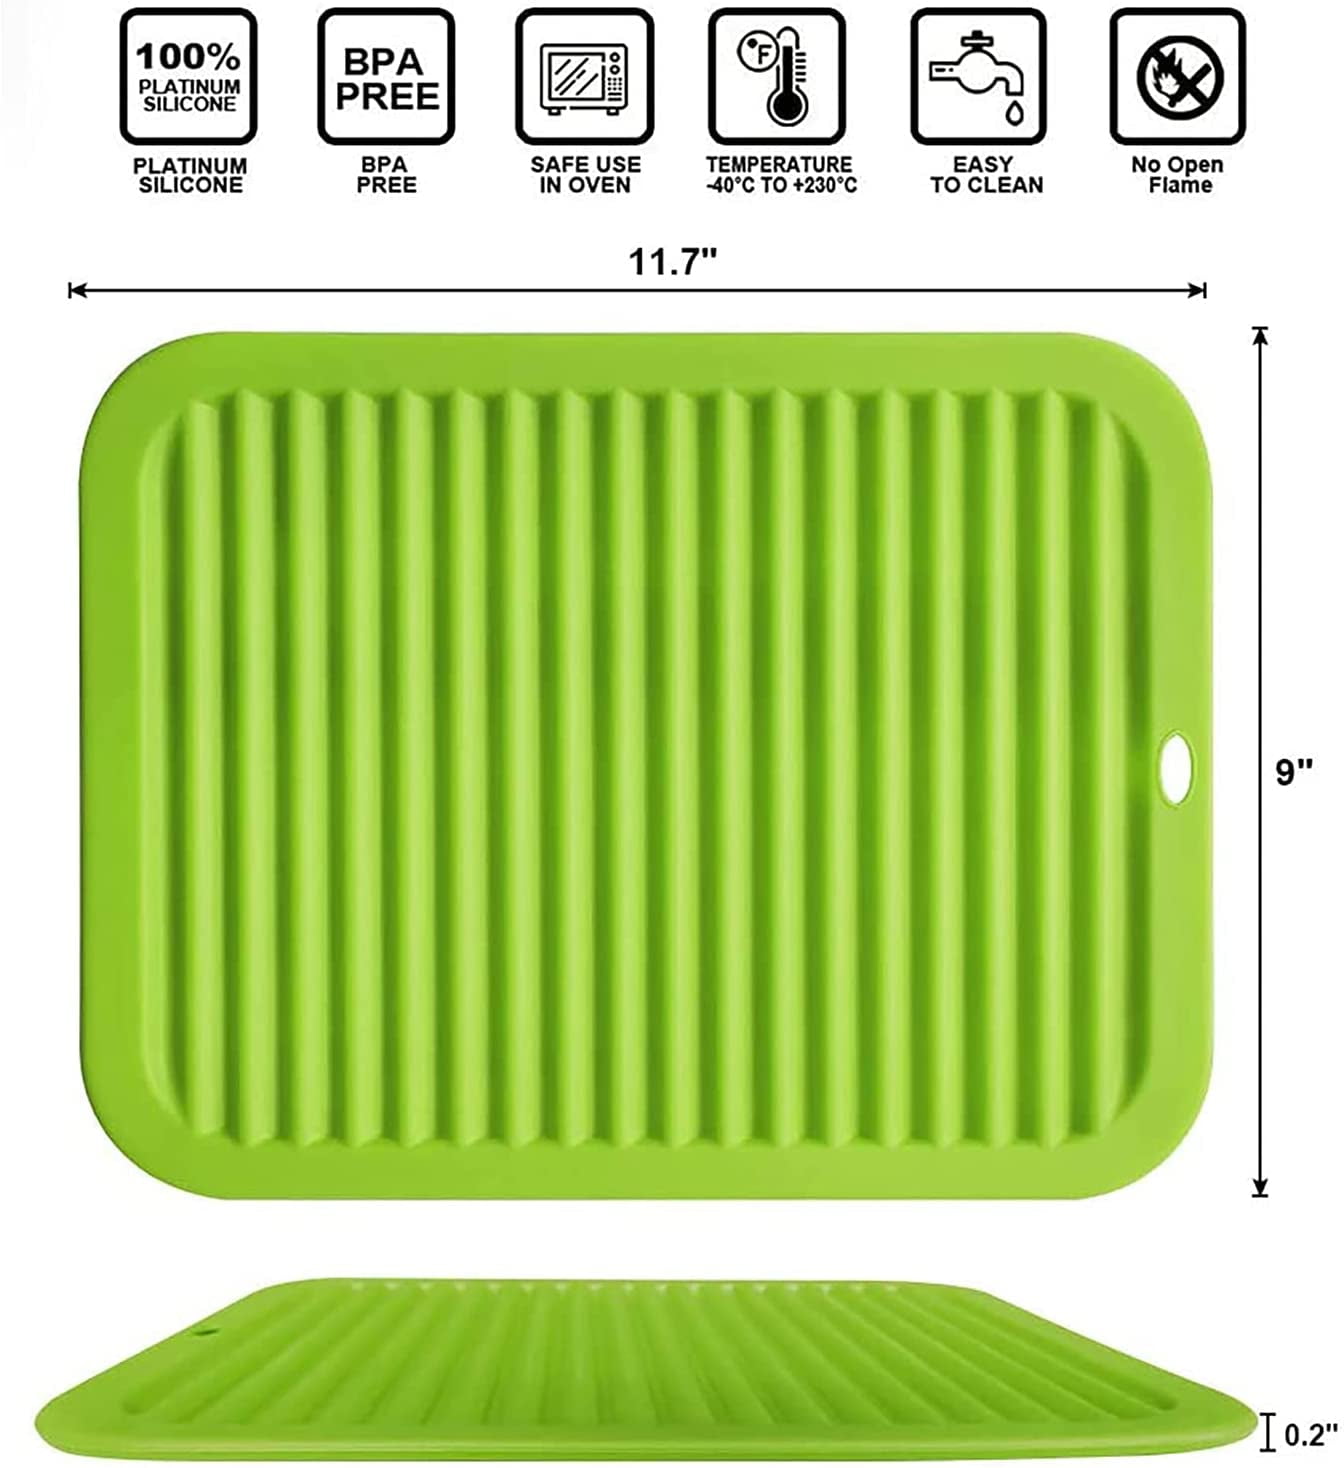 Walfos Silicone Trivets for Hot Pots and Pans - Heat Resistant Hot Pads for  Kitchen Counter- Multi-Purpose & Versatile Trivet Mat - Durable & Flexible